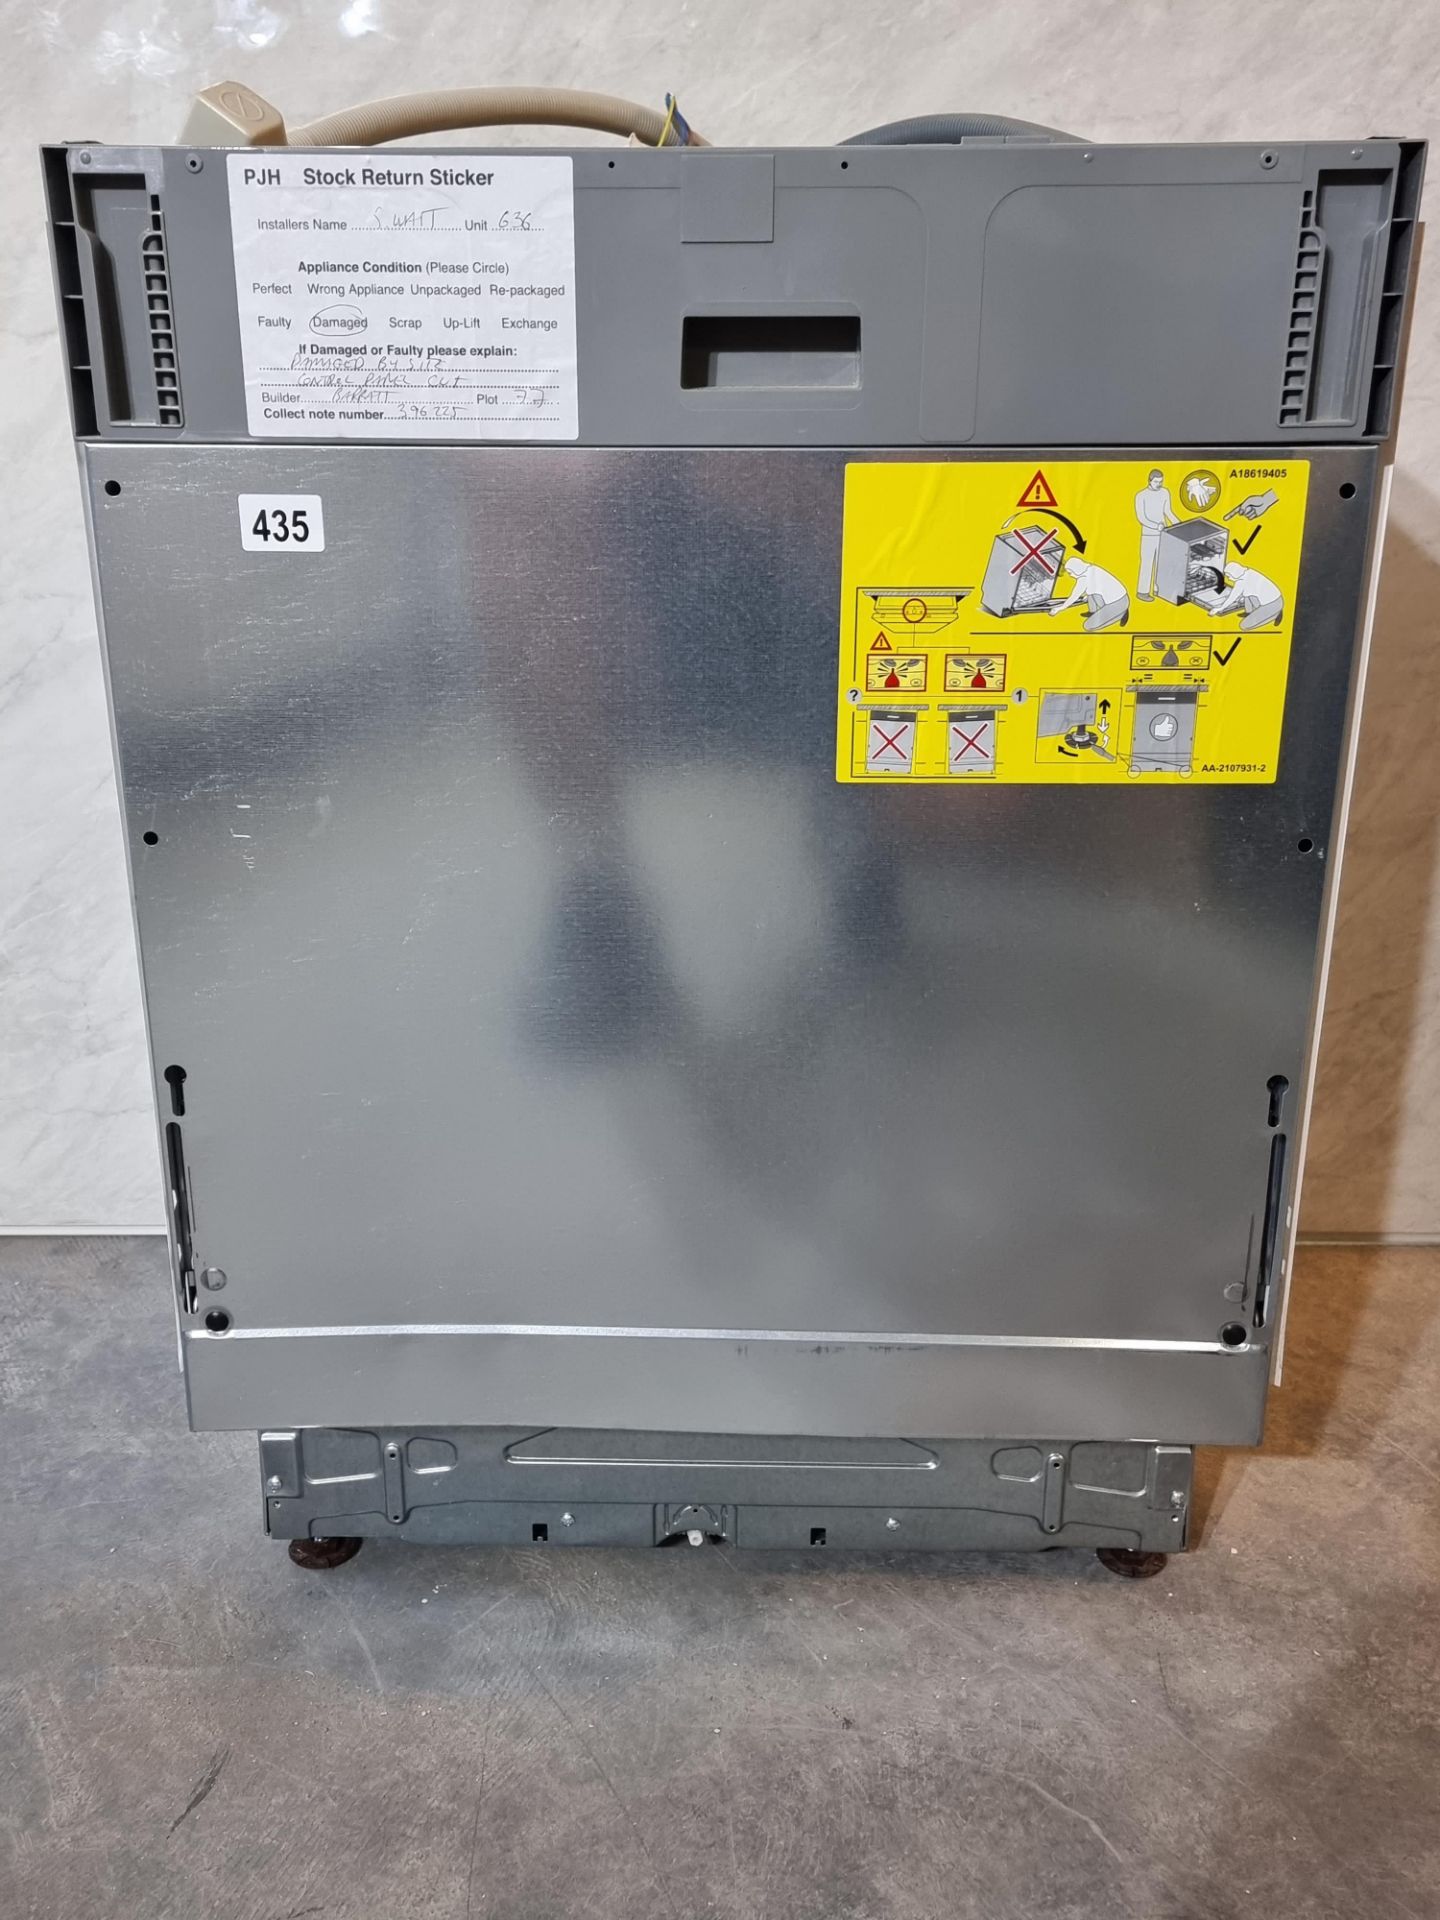 Electrolux Dishwasher KEAF7100L Air dry 60cm RRP £400